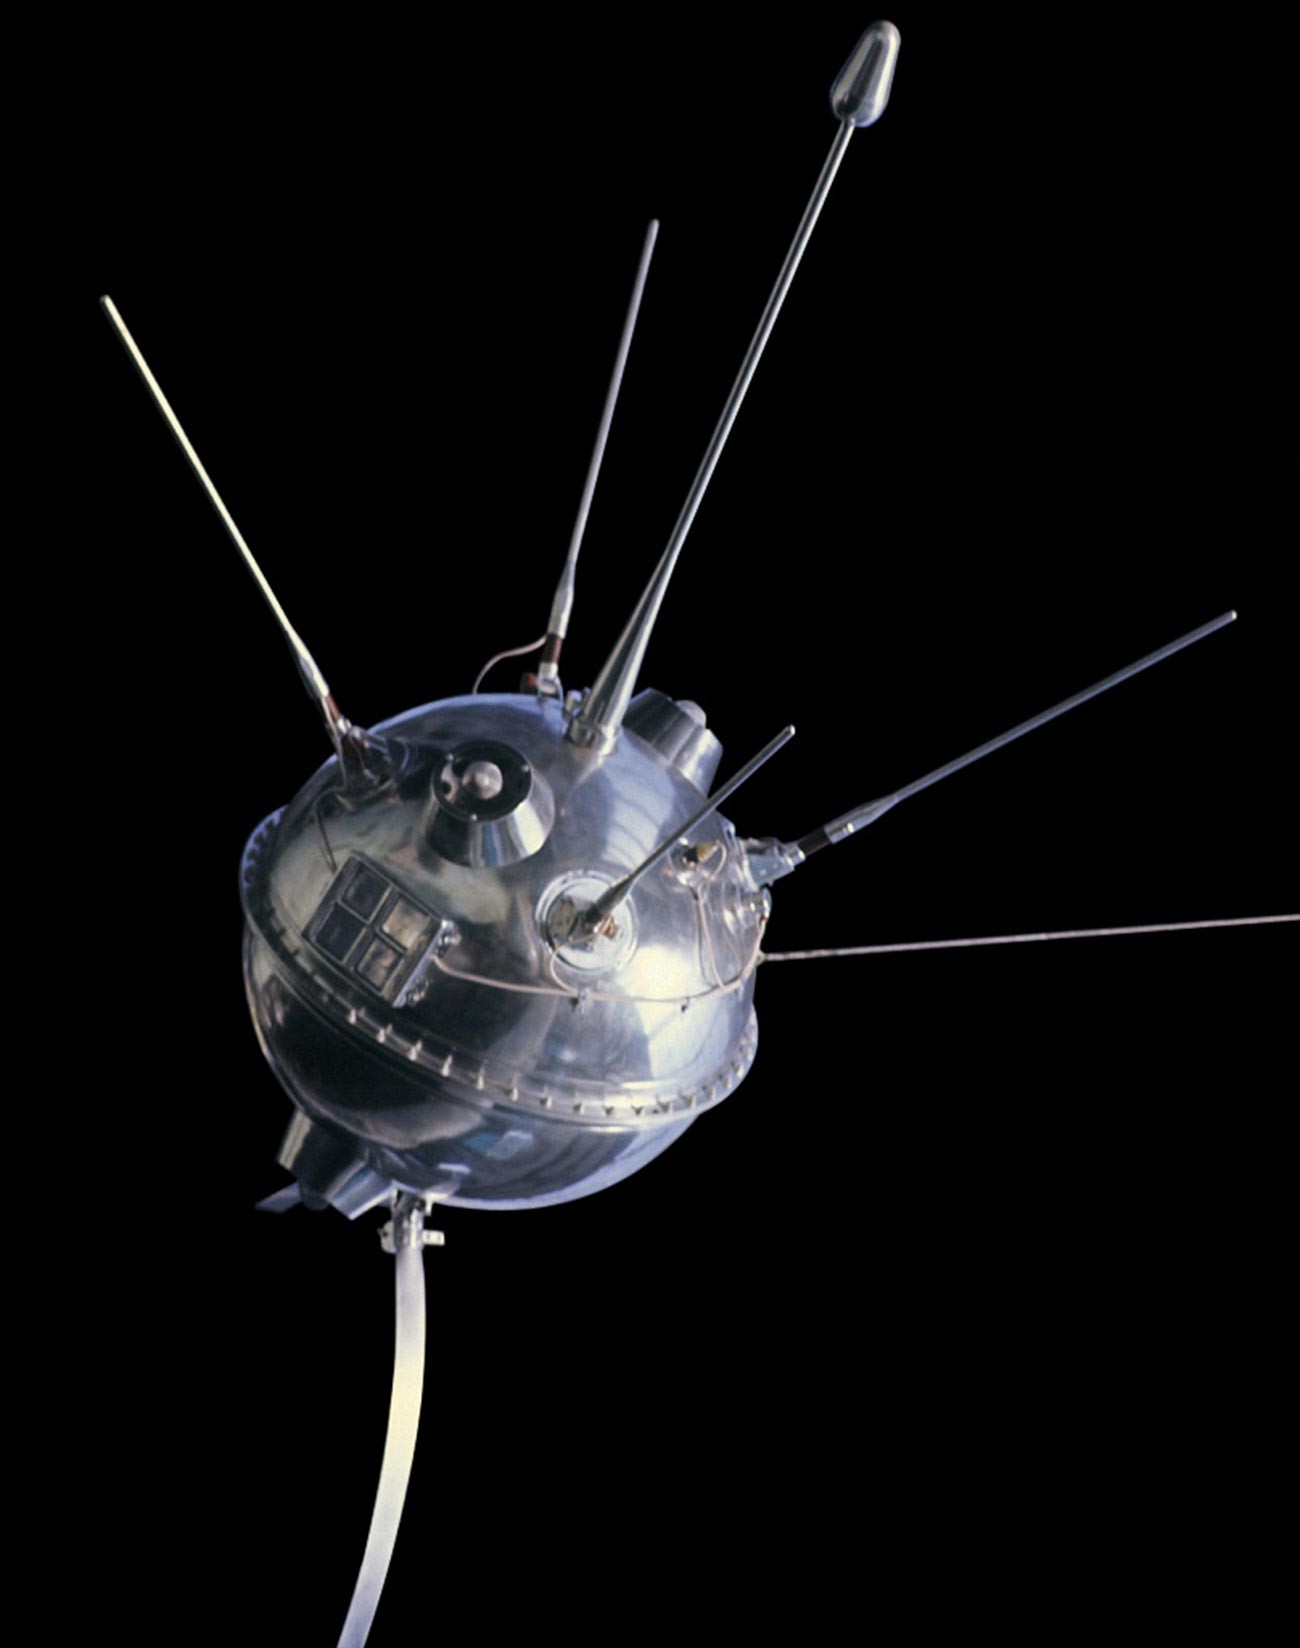 La sonde Luna-1